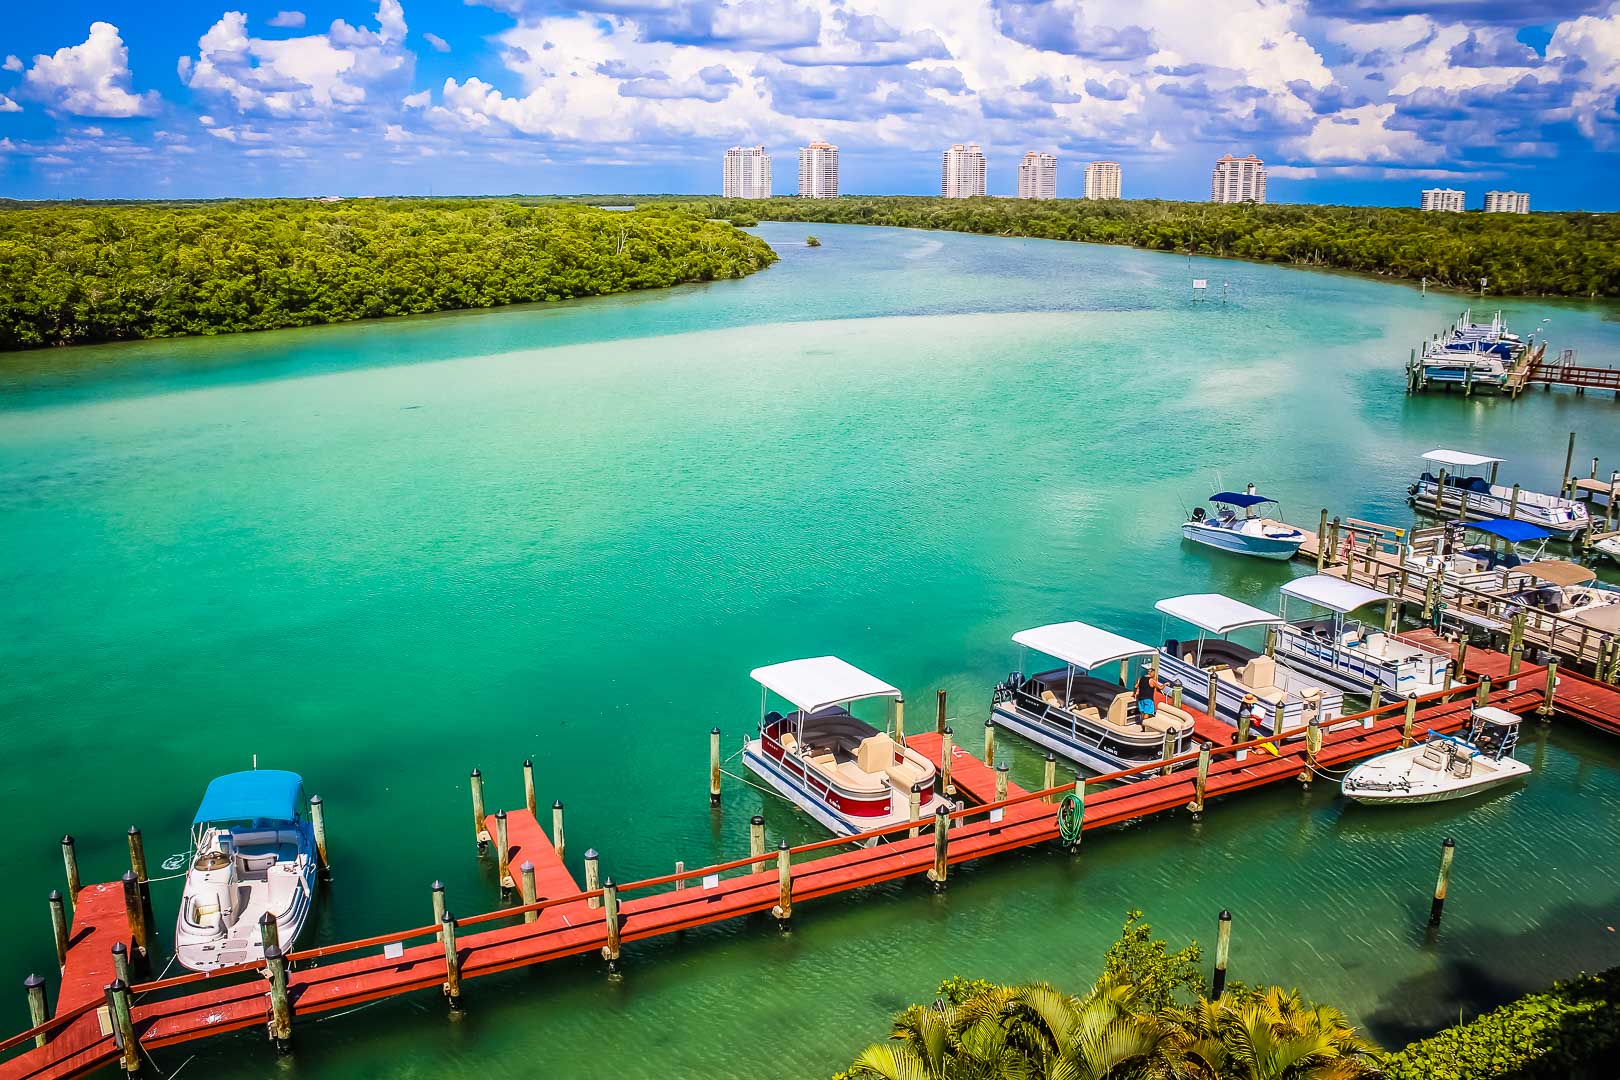 A scenic view of the boat dock at VRI's Bonita Resort and Club in Florida.